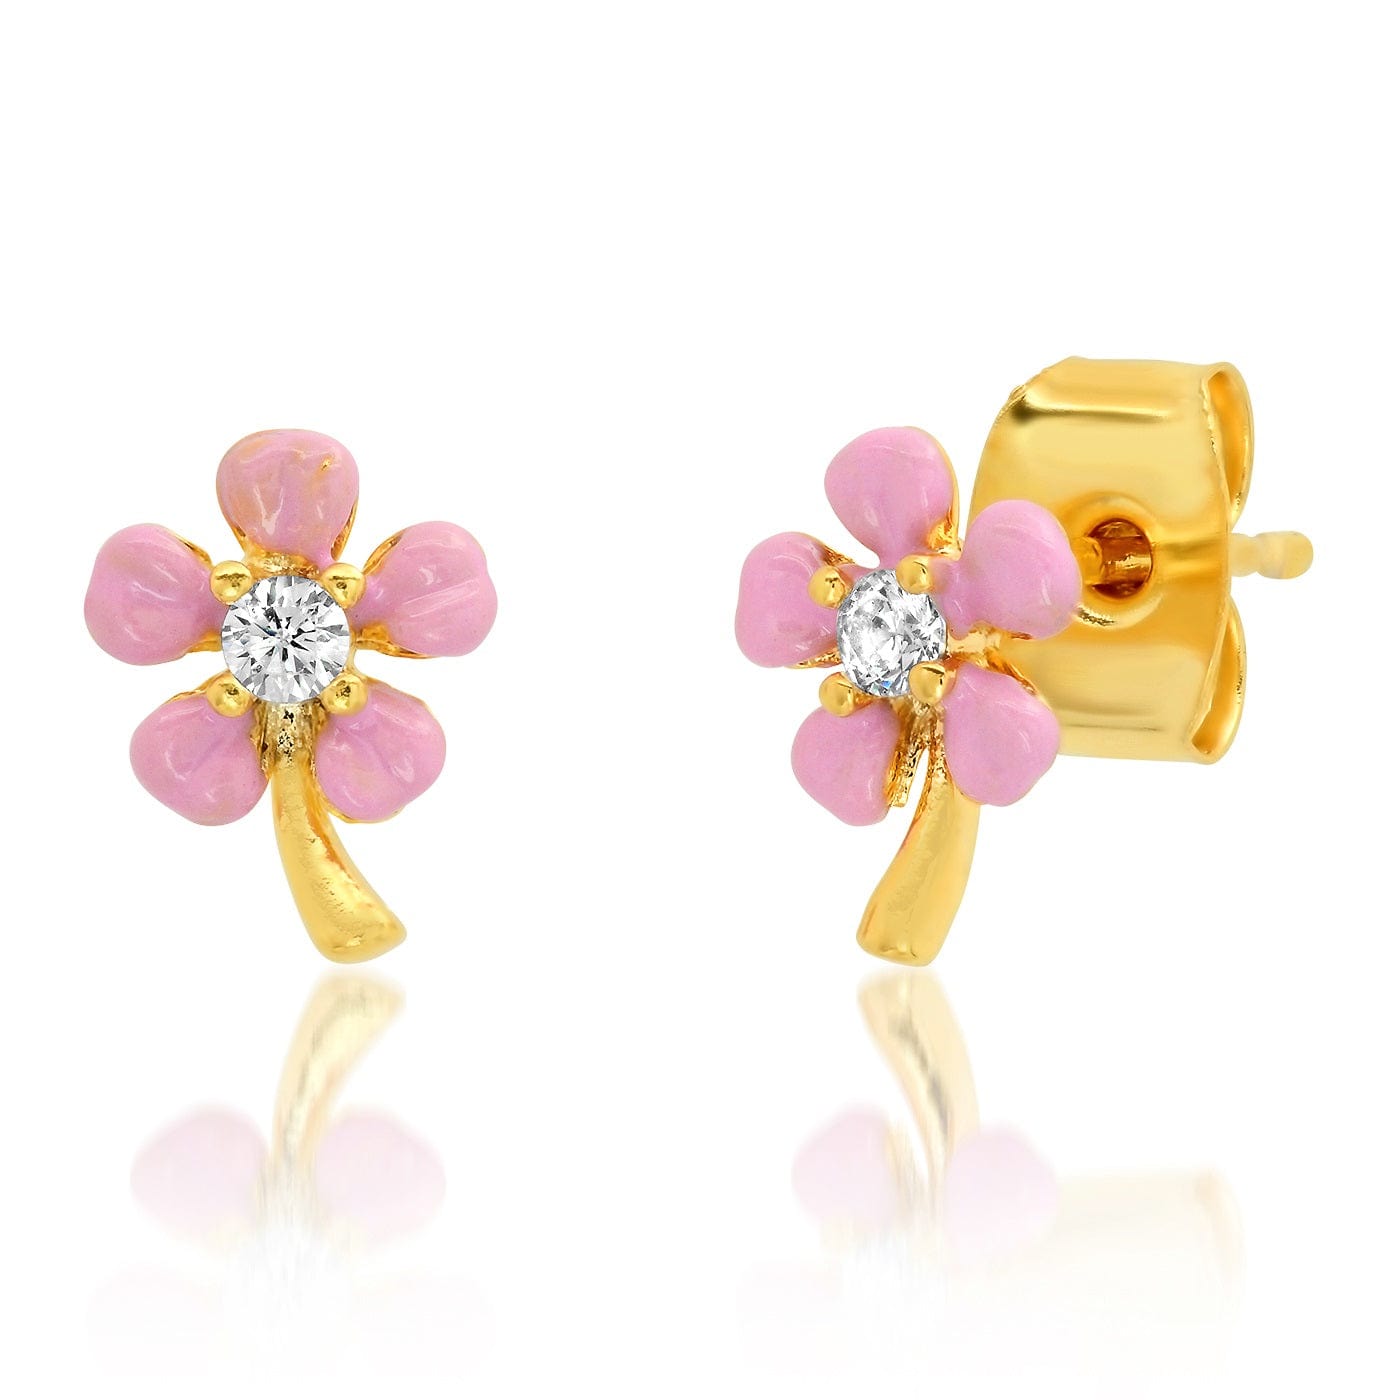 TAI JEWELRY Earrings Pink Flower Enameled Stud